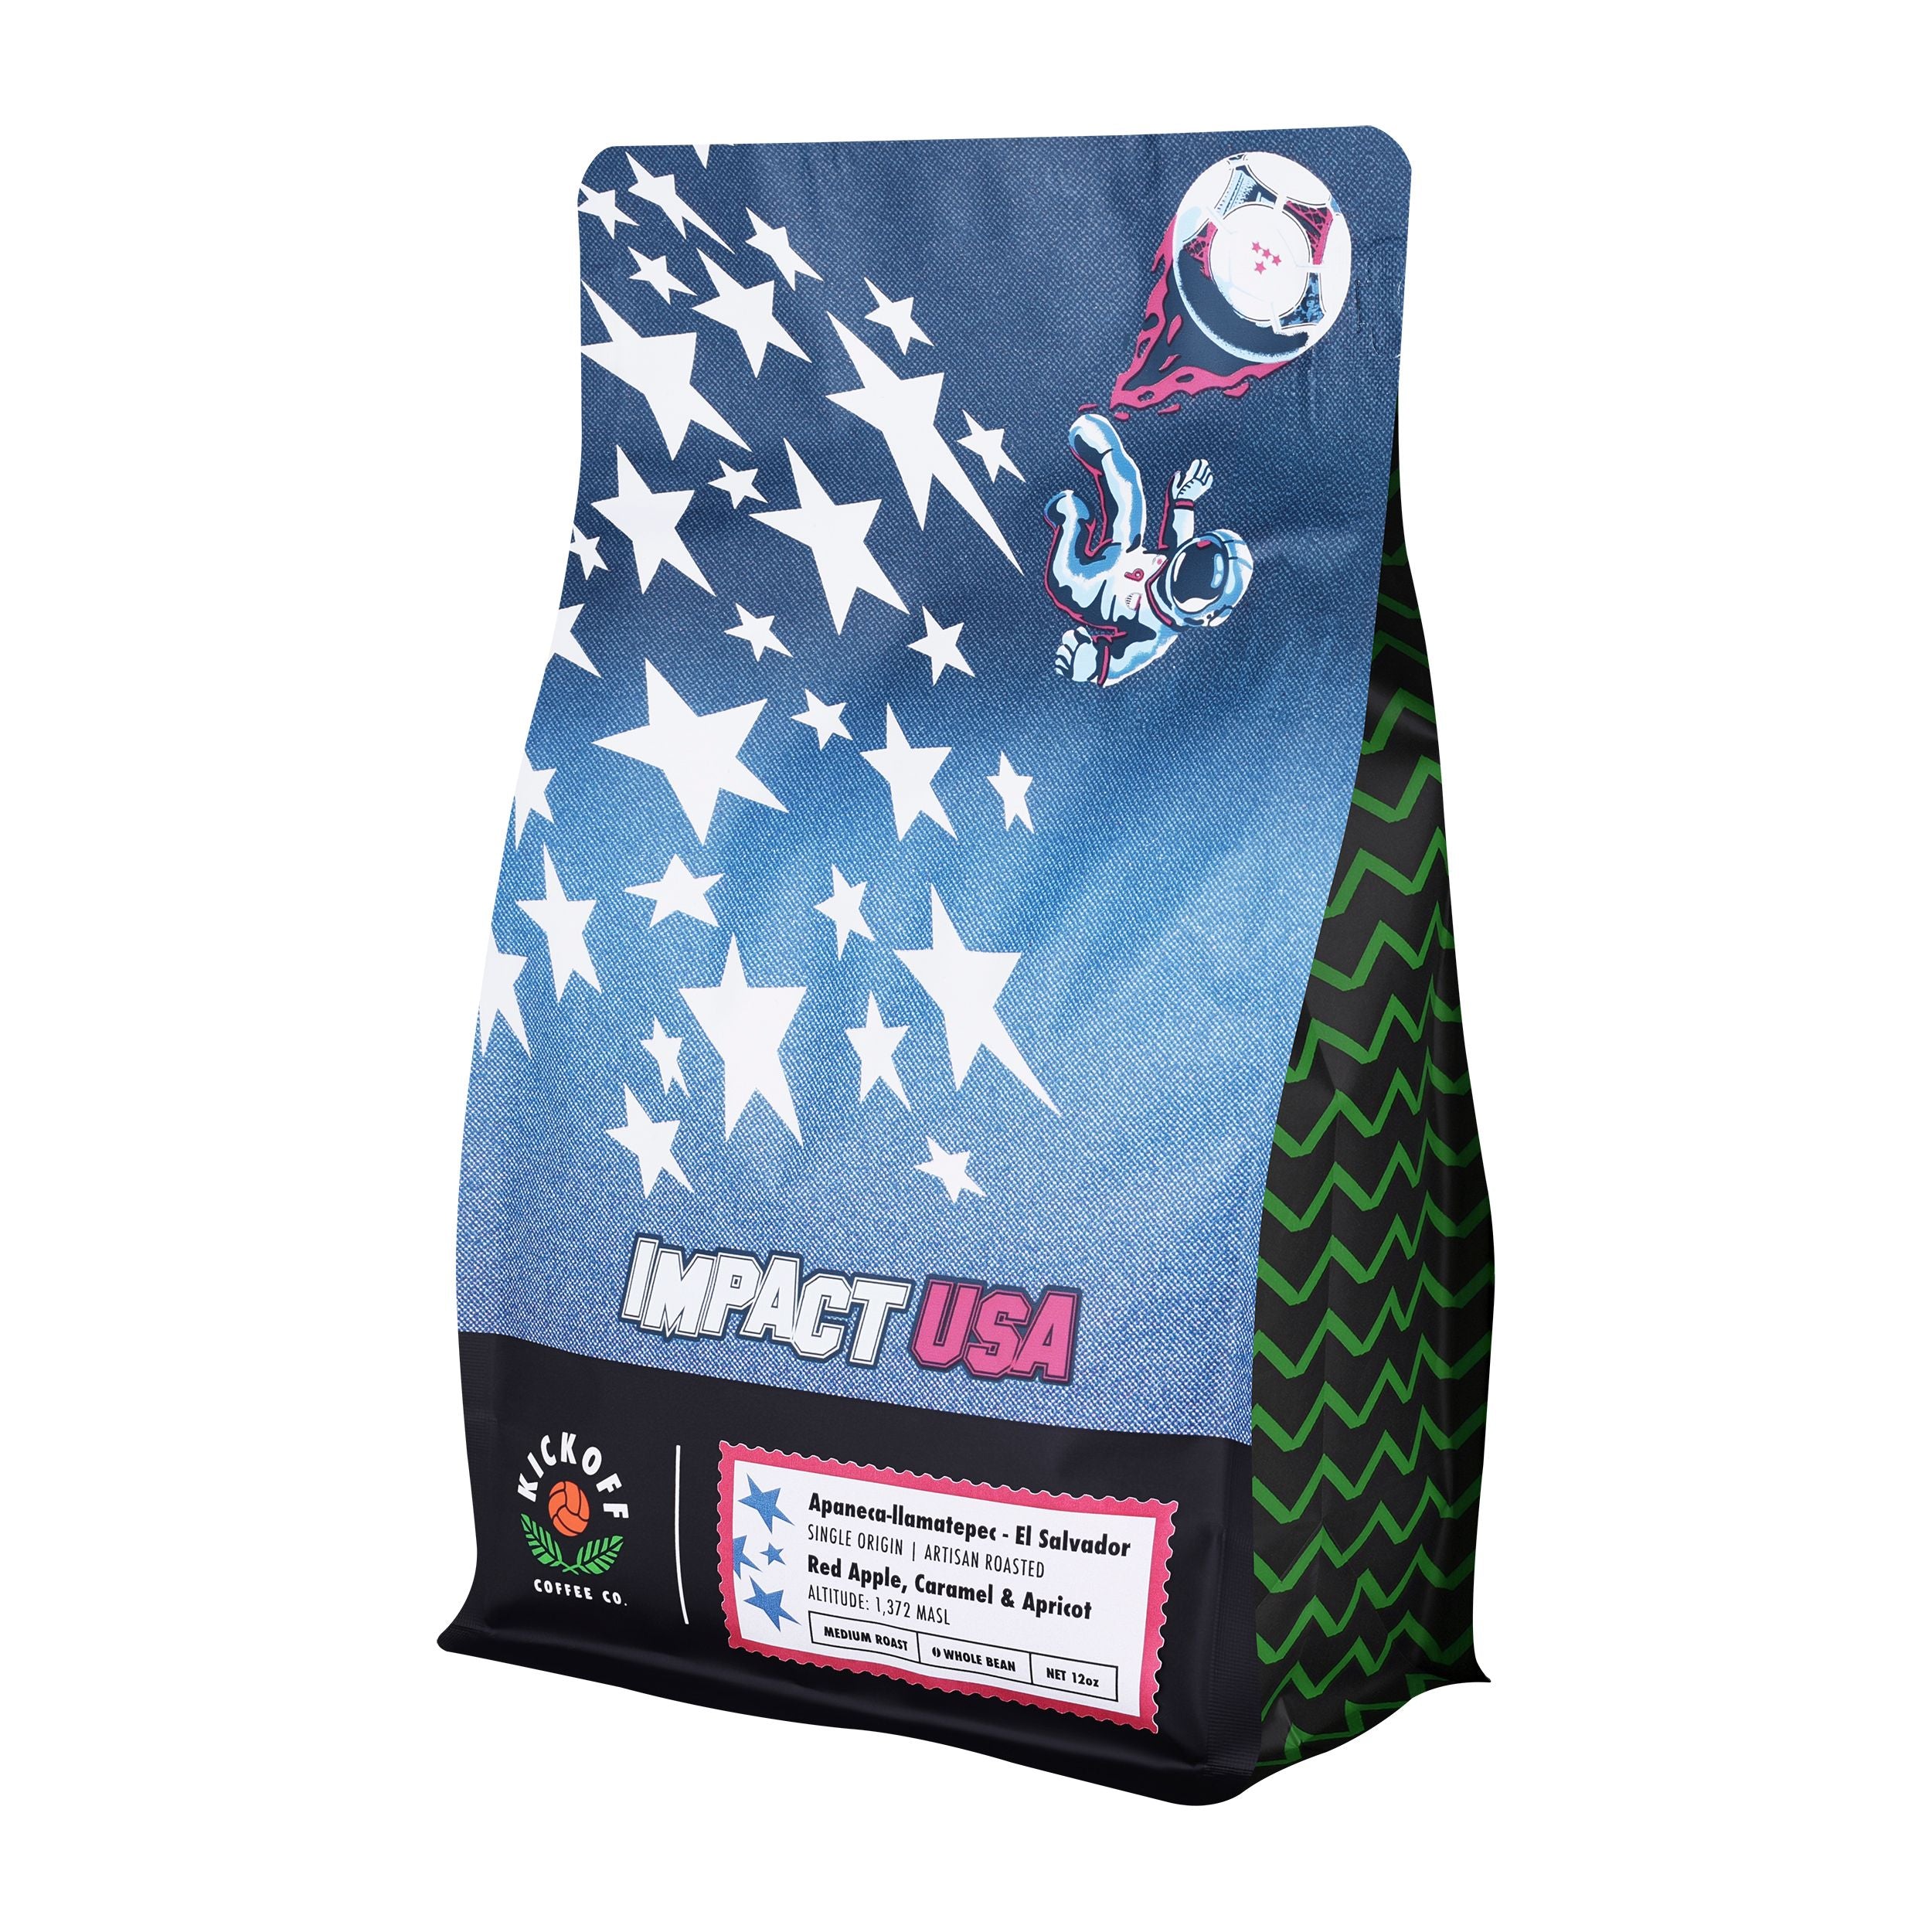 Impact USA Coffee Bag | Kickoff Coffee Co | American Outlaws| El Salvador coffee| Soccer Coffee | Coffee for Soccer People by Soccer People | USNWT | USMNT | USA coffee